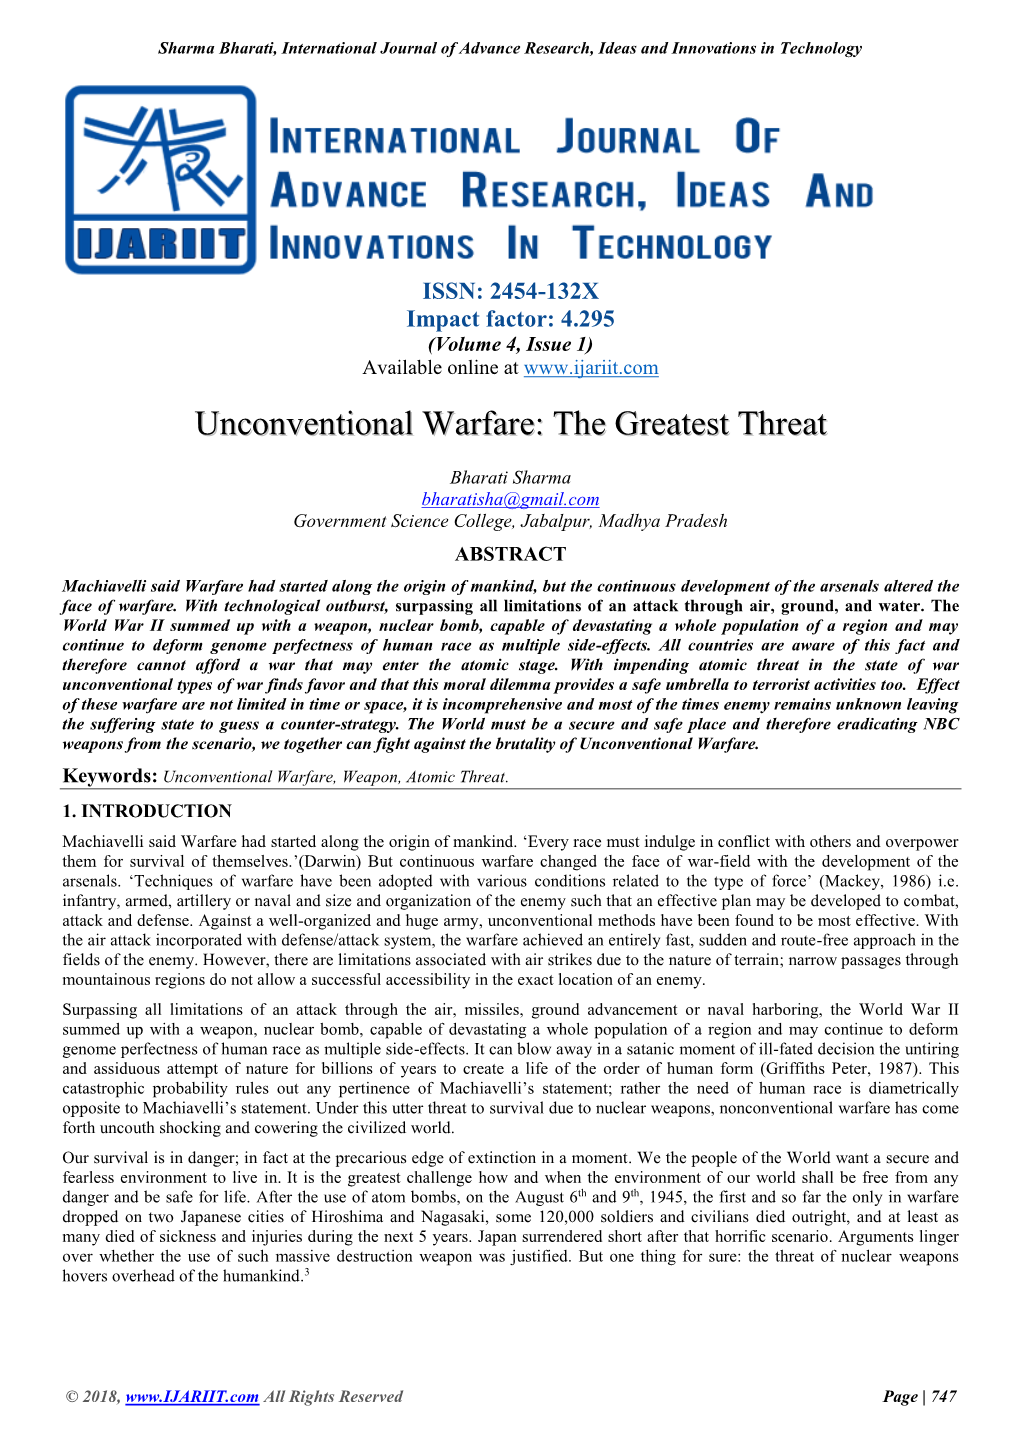 Unconventional Warfare: the Greatest Threat